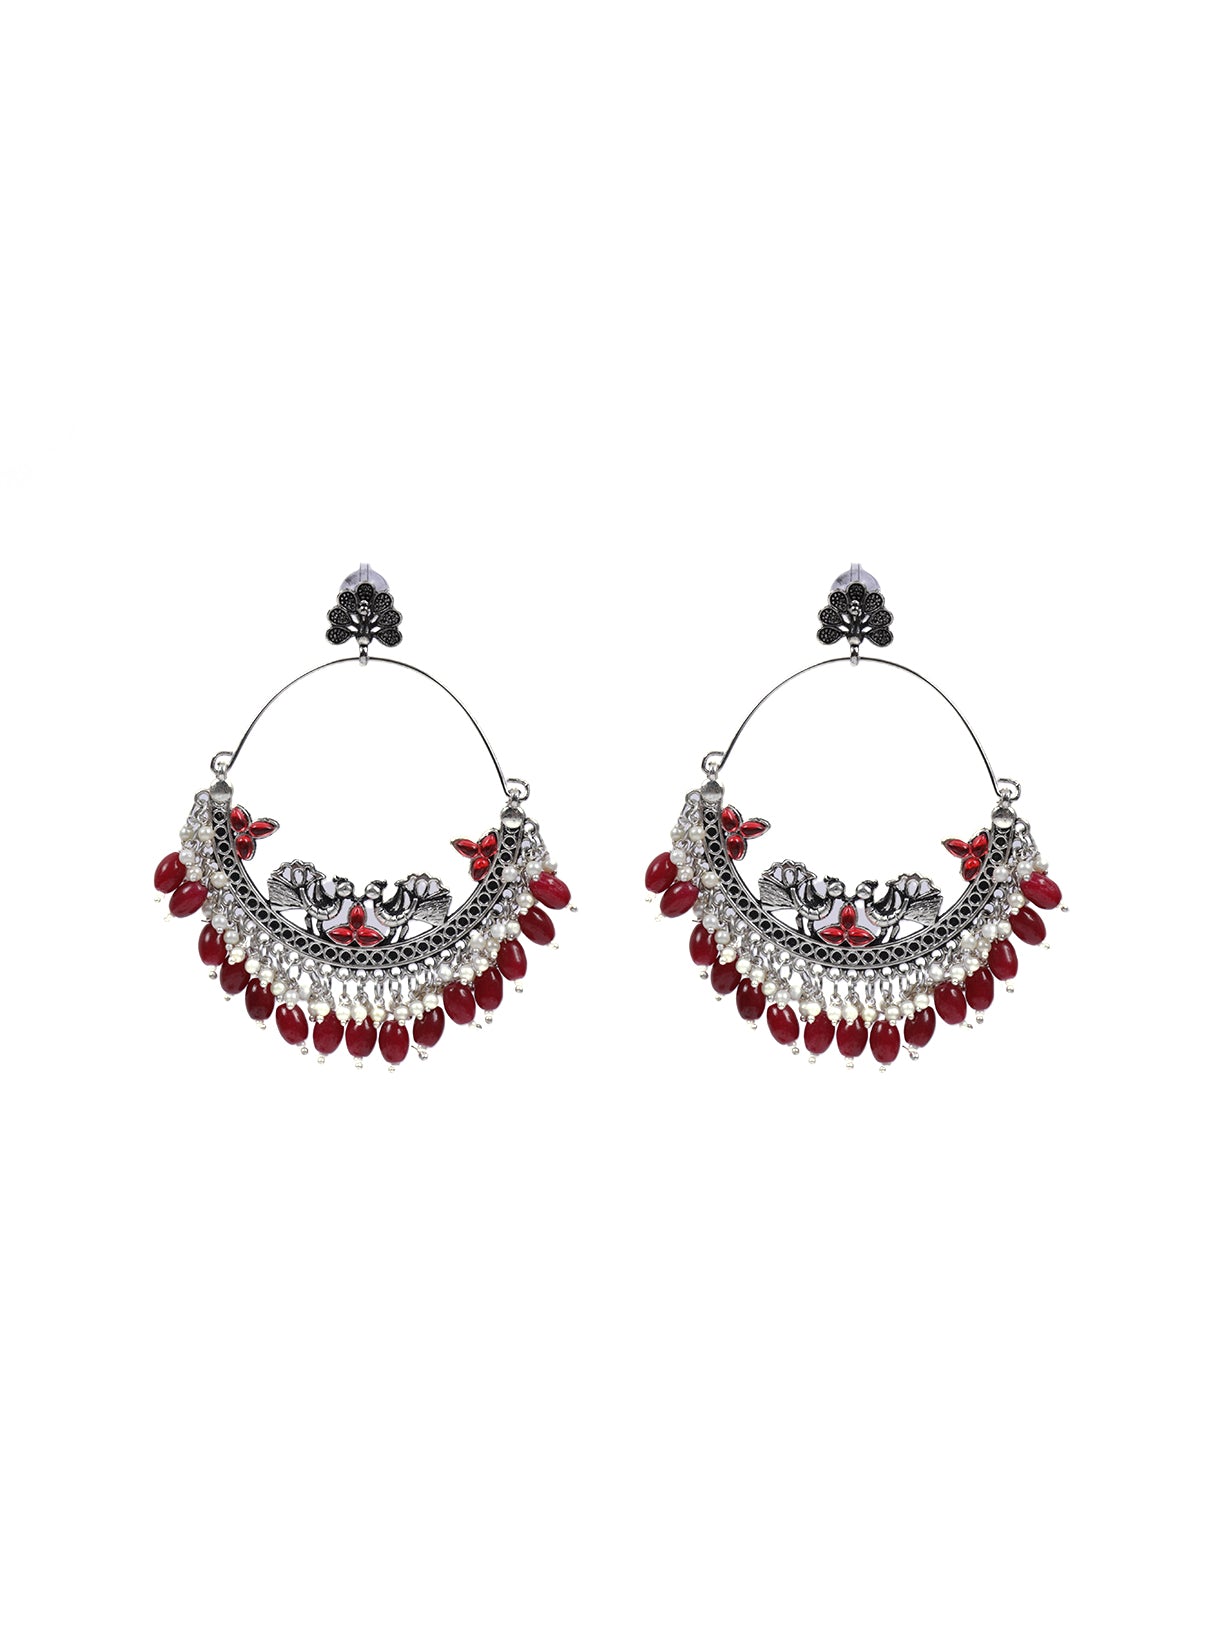 Chandbali Dangler Earrings with Peacock Motifs and Maroon Beads